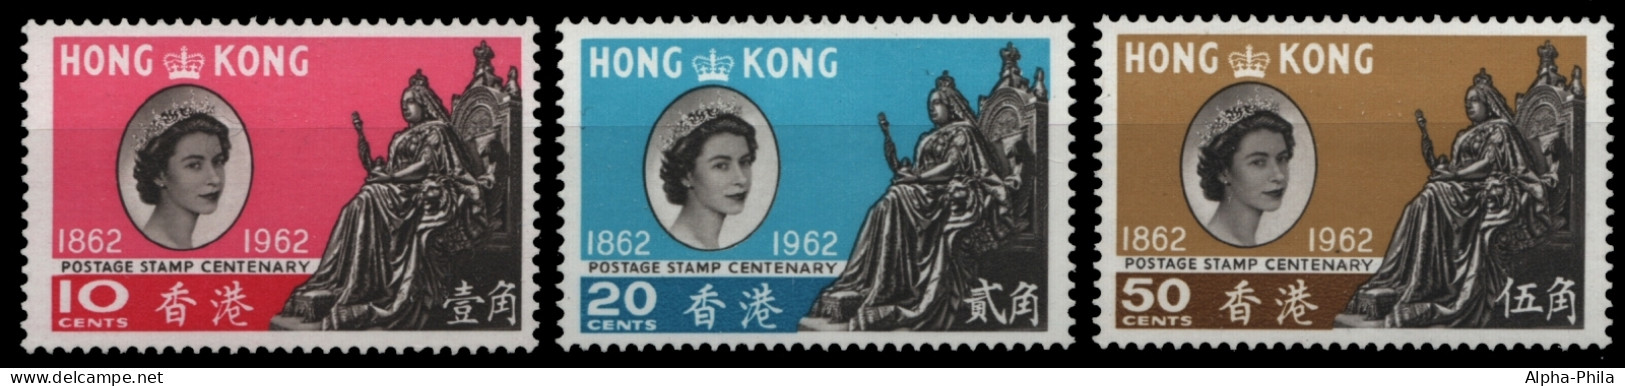 Hongkong 1962 - Mi-Nr. 193-195 ** - MNH - 100 Jahre Hongkong-Briefmarken - Nuovi